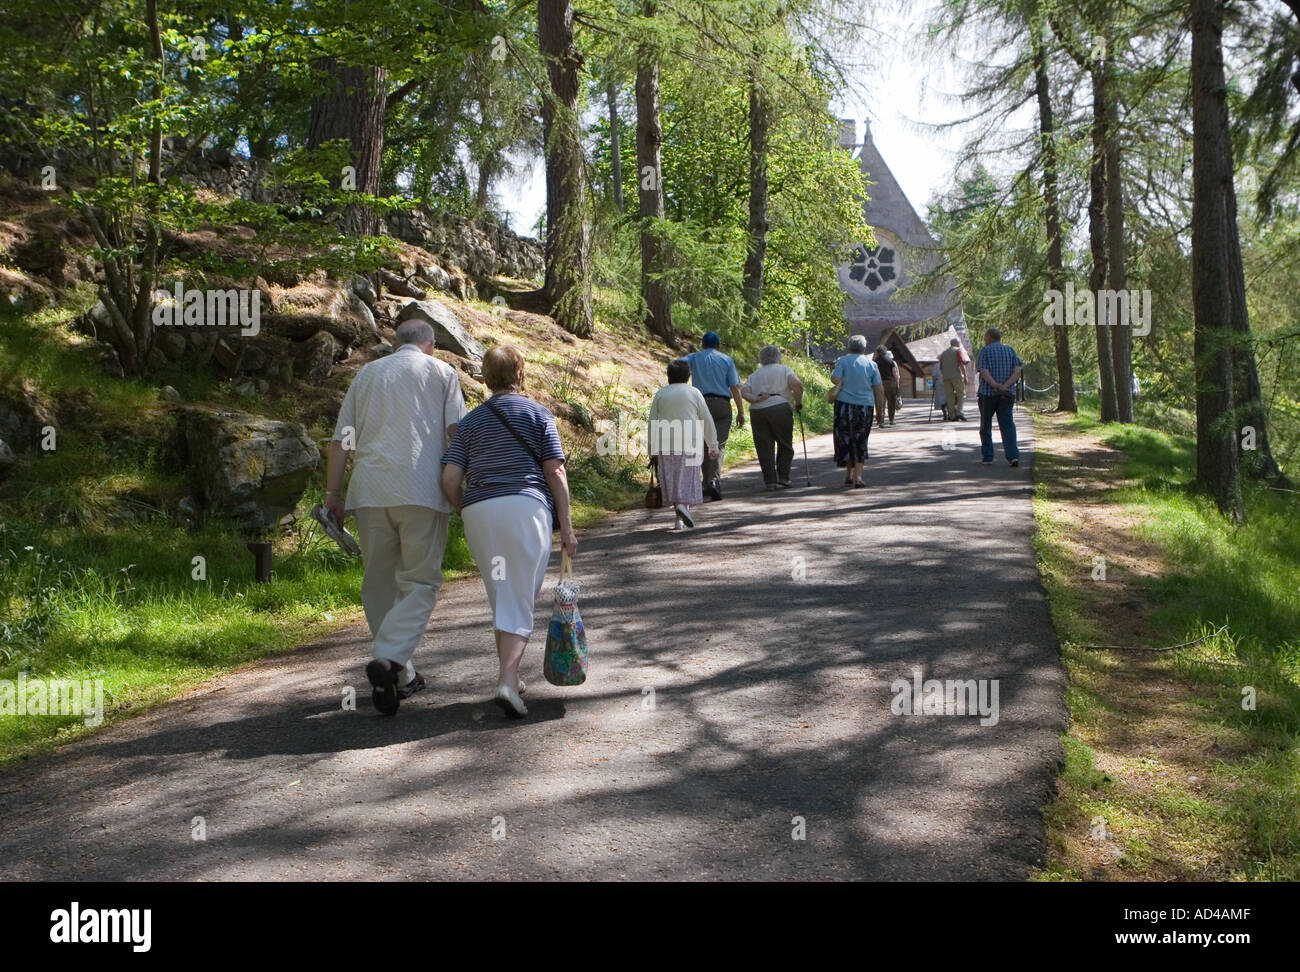 Los turistas que visitan Crathie Kirk o Balmoral iglesia parroquial, Royal Deeside, turismo Escocés en Aberdeenshire, Parque Nacional de Cairngorms, Escocia, Reino Unido Foto de stock